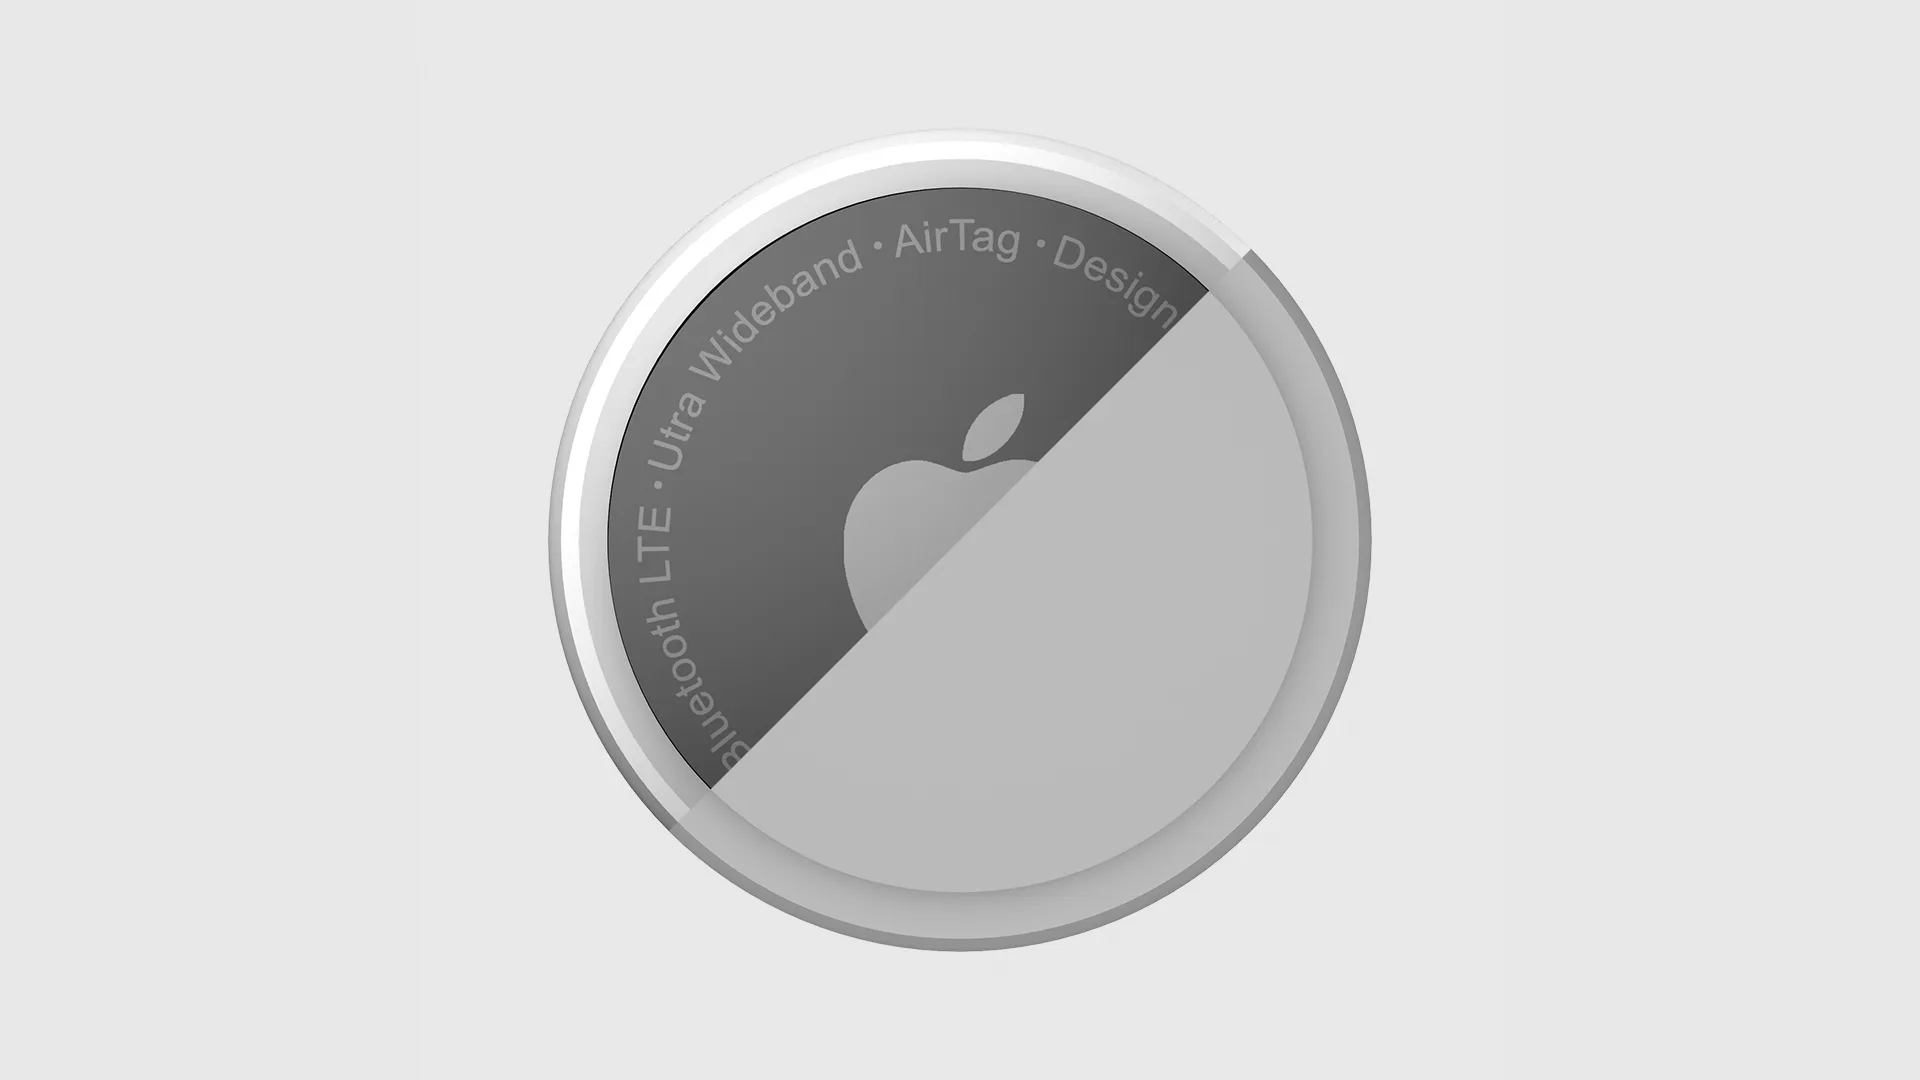 Apple AirTags